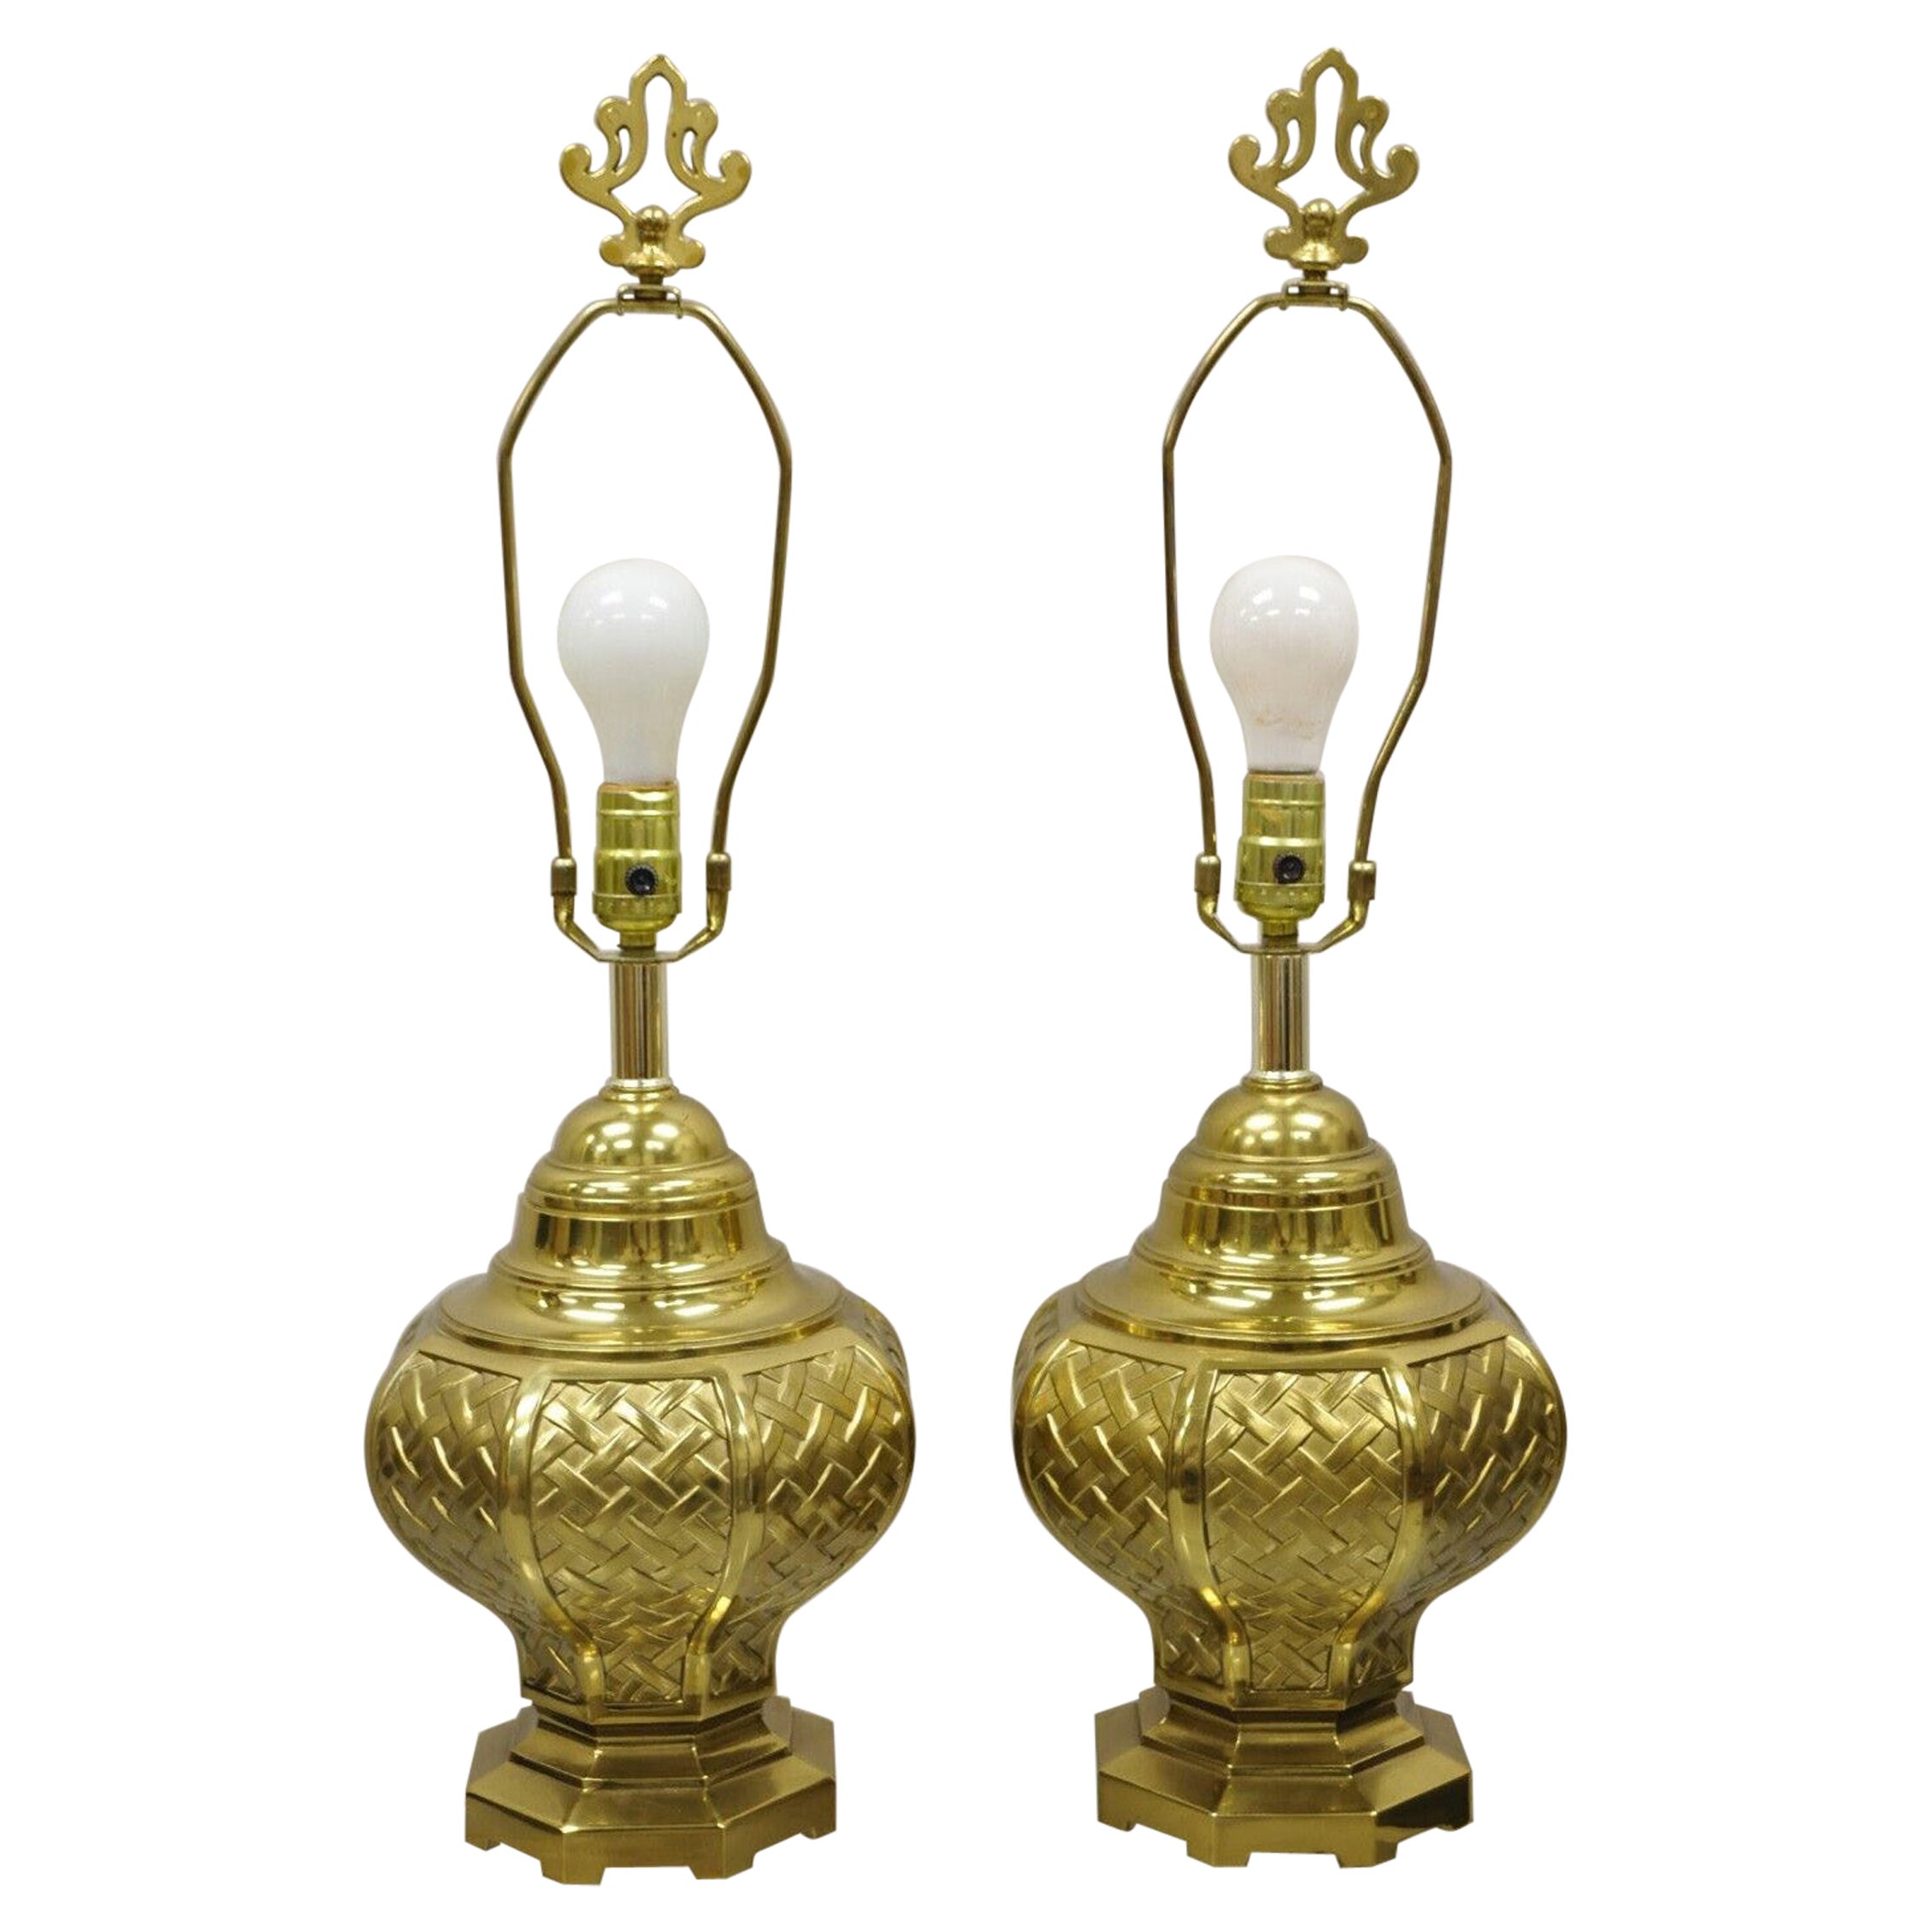 Hollywood-Regency-Tischlampen aus Messing mit Korbgeflecht, Paar, Vintage